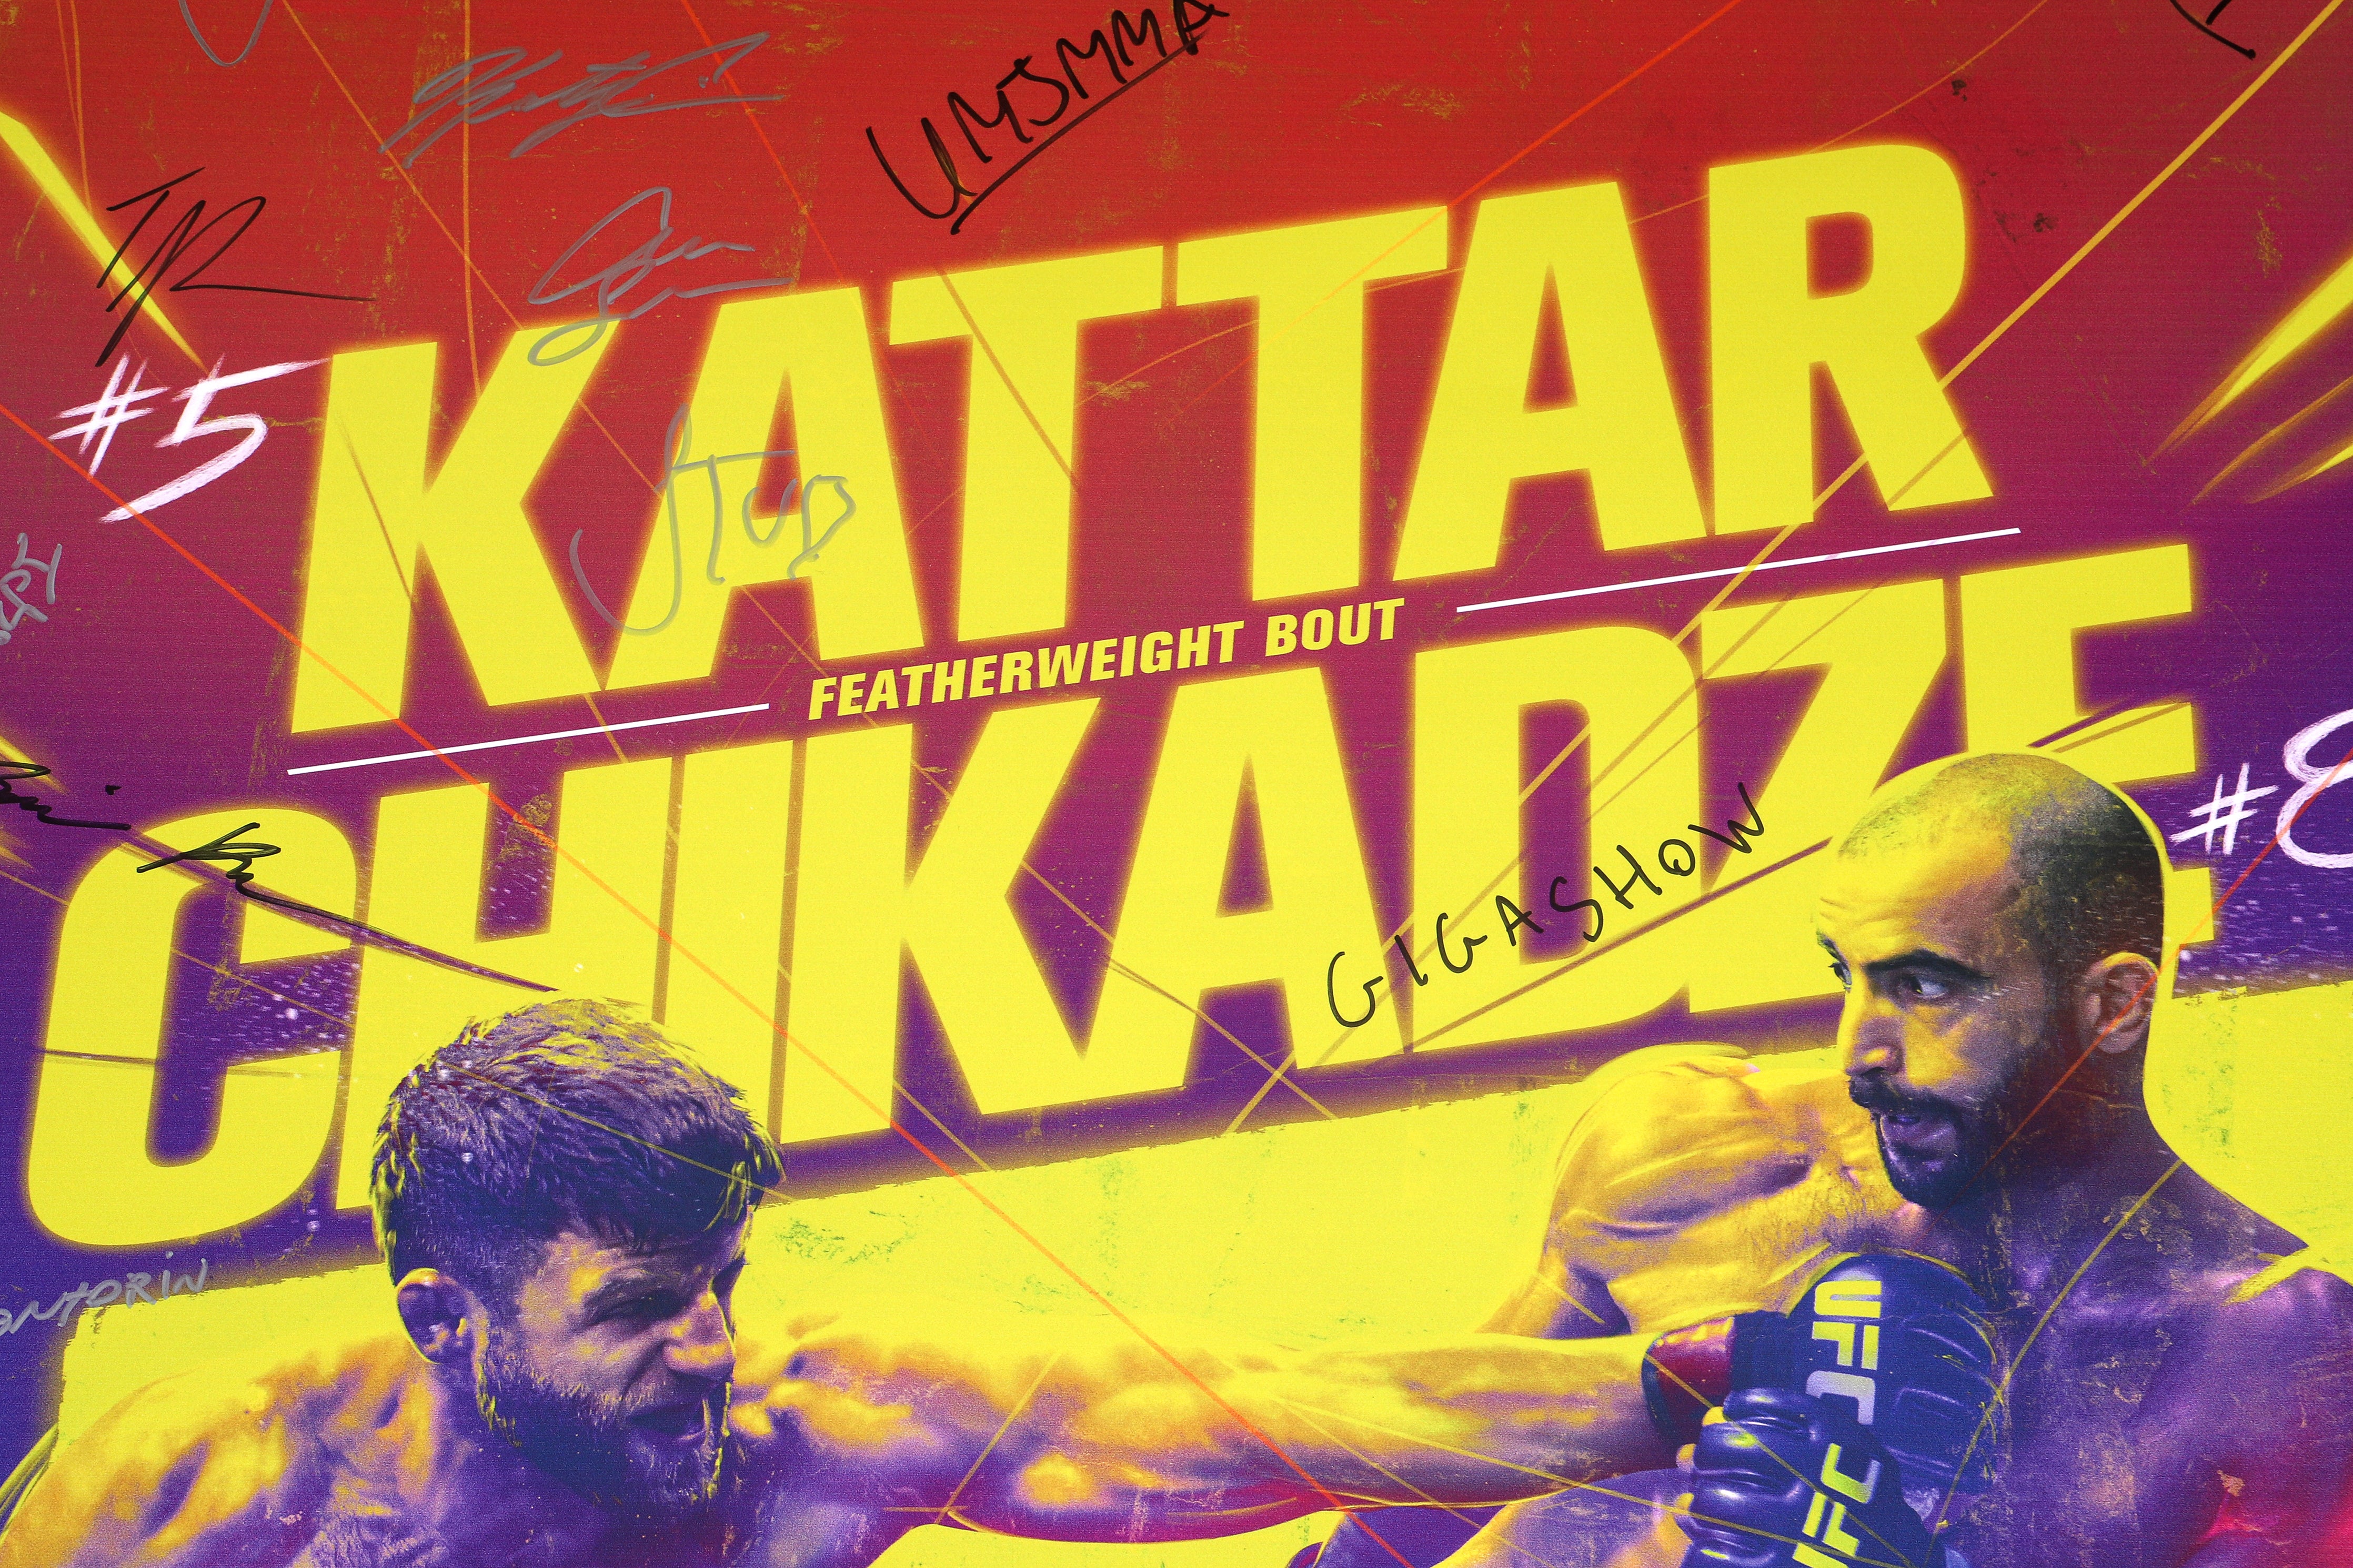 Event poster from the Kattar vs Chikadze UFC Vegas 47